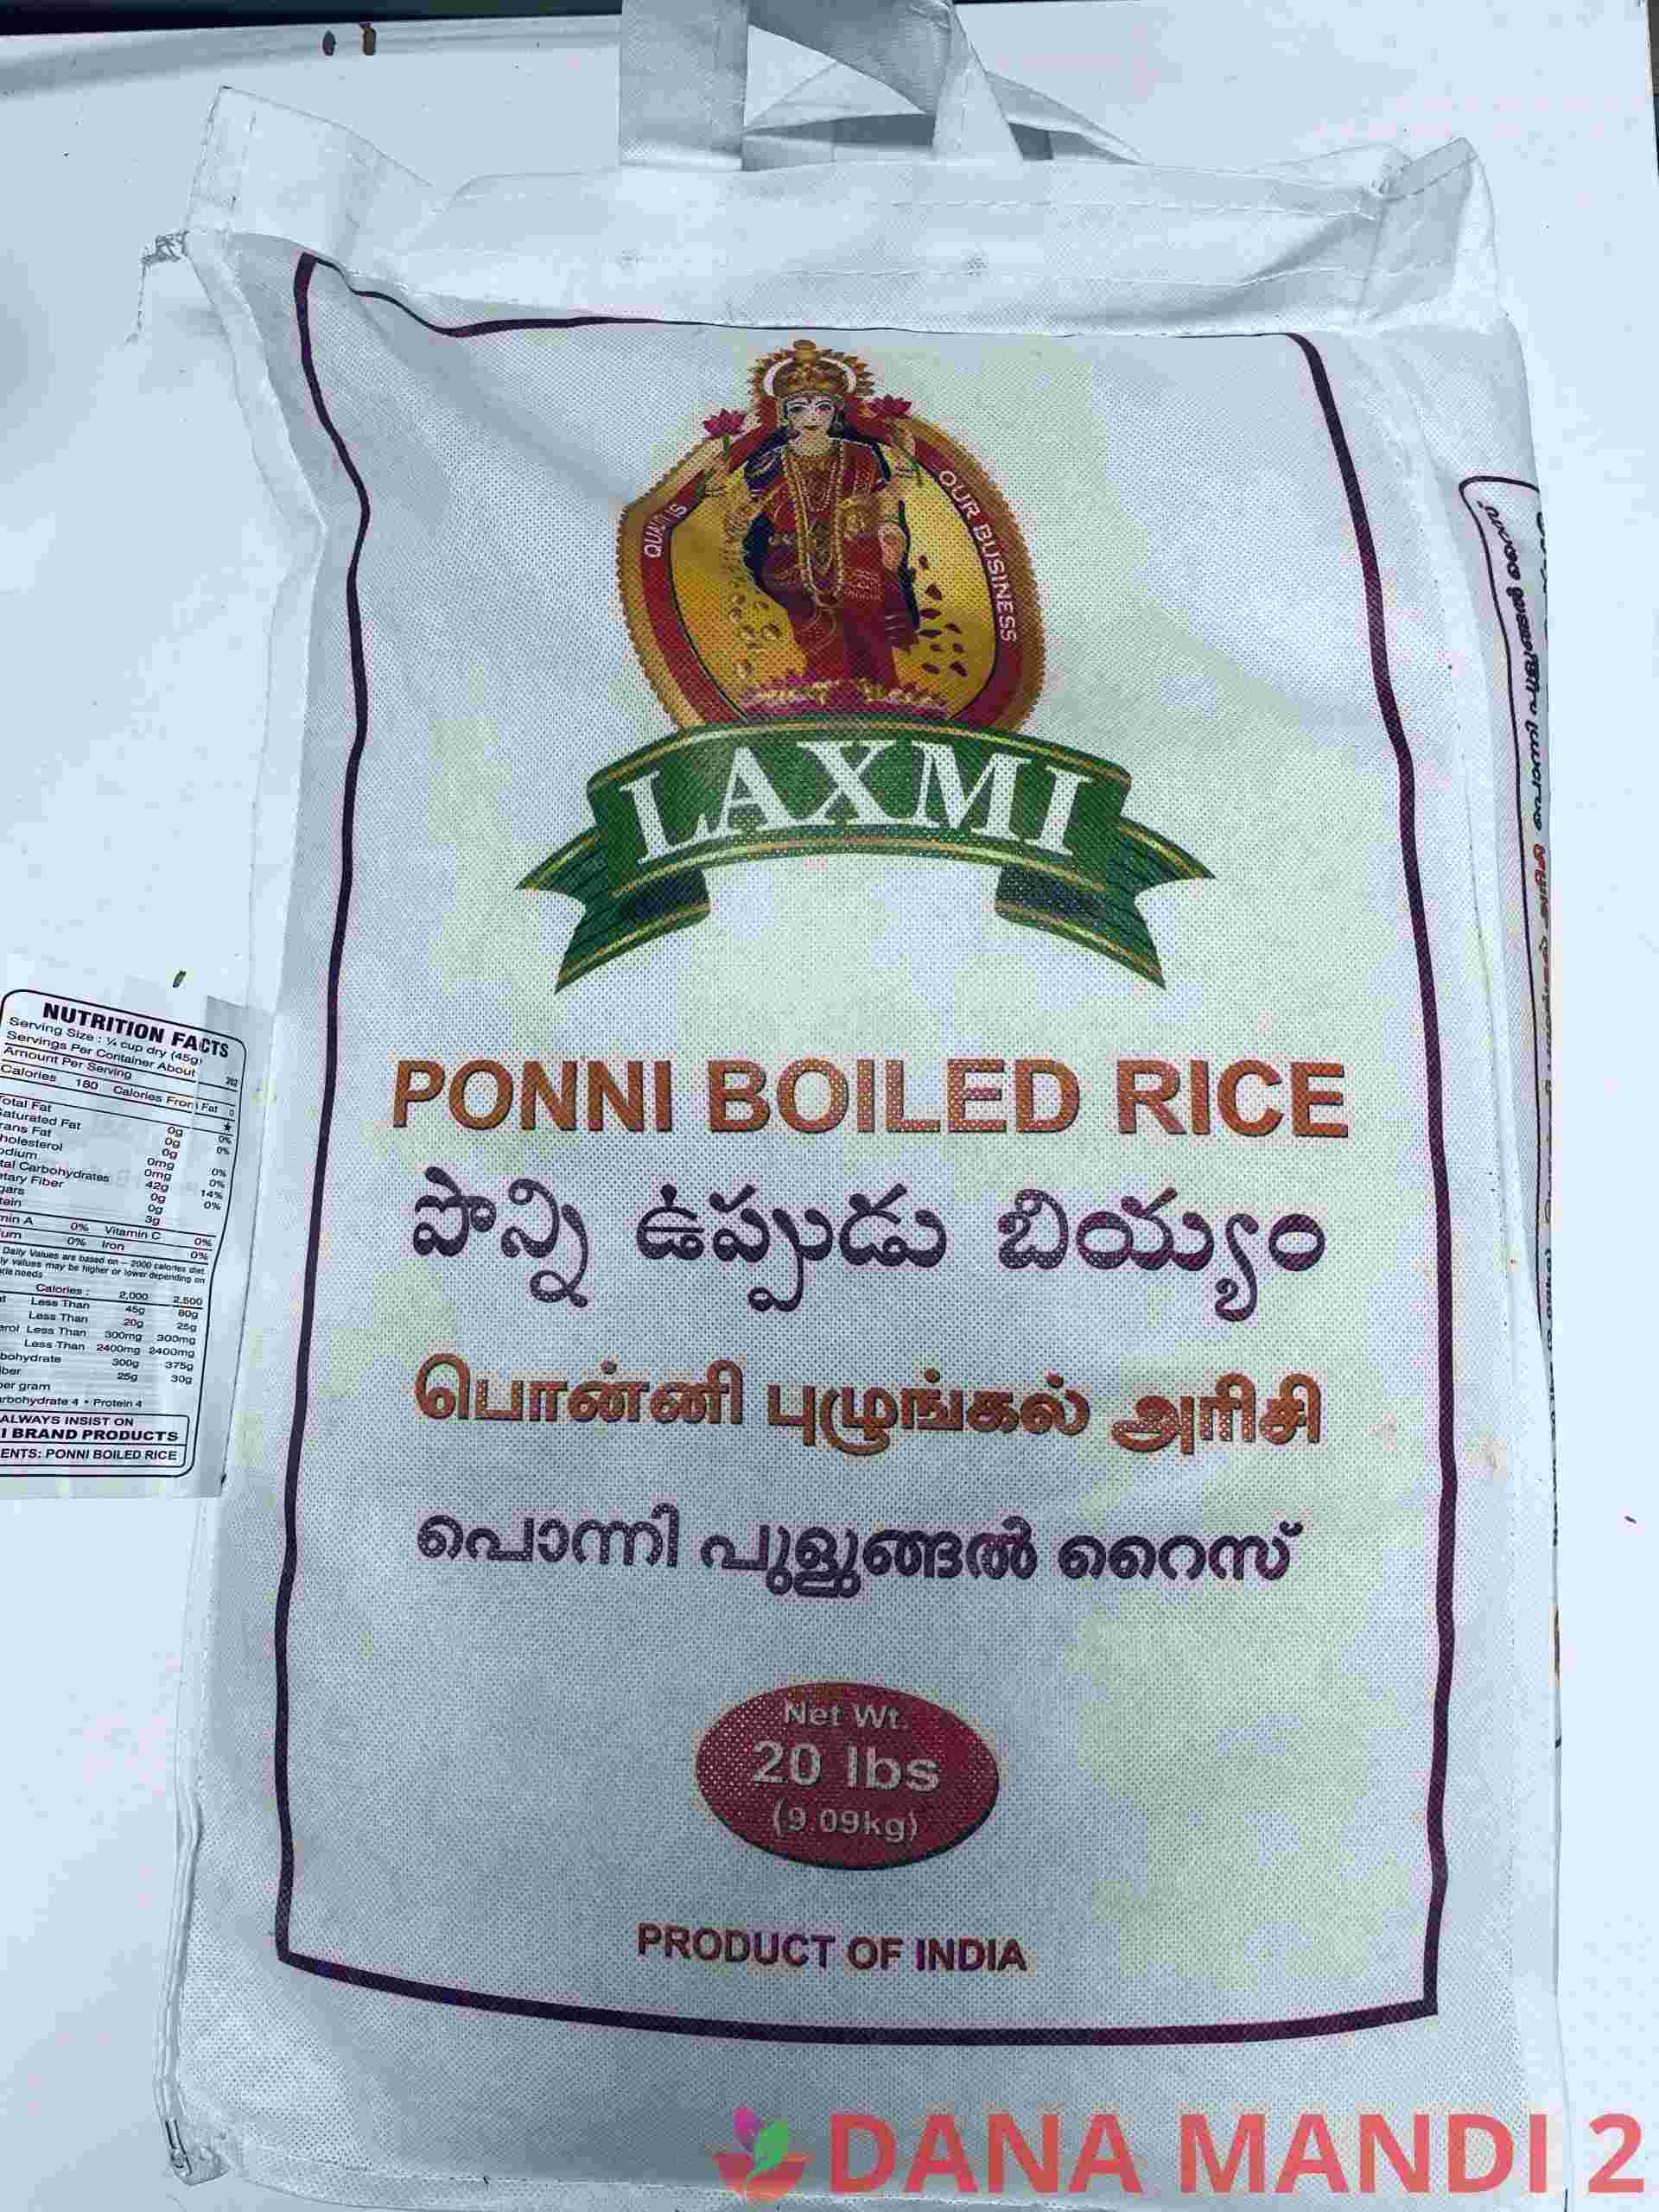 Laxmi Ponni Boiled Rice